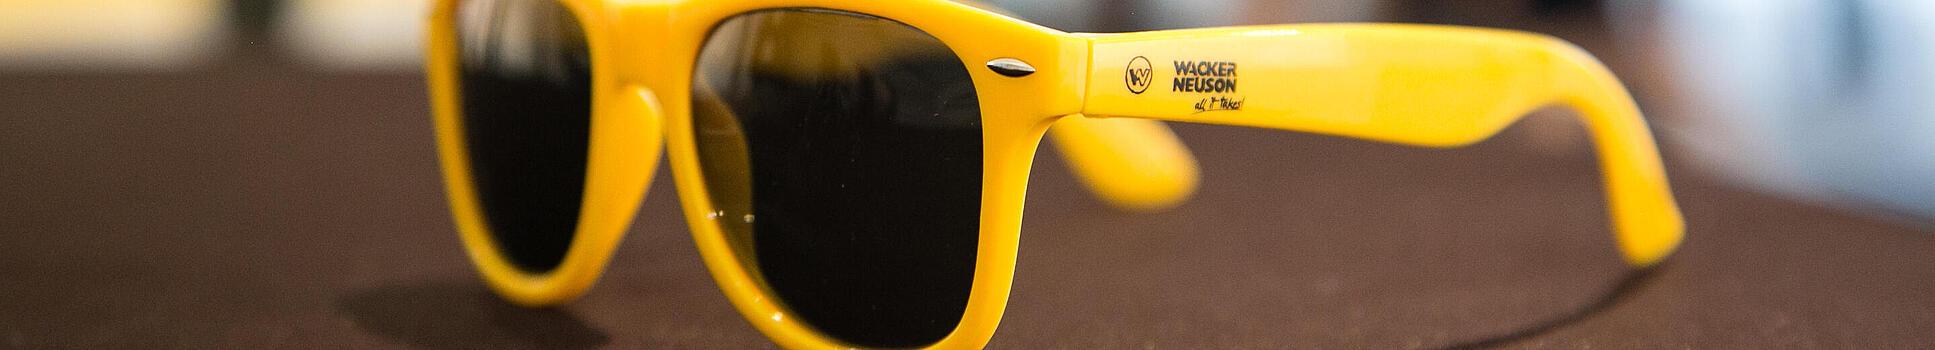 Yellow sunglasses with Wacker Neuson logo.